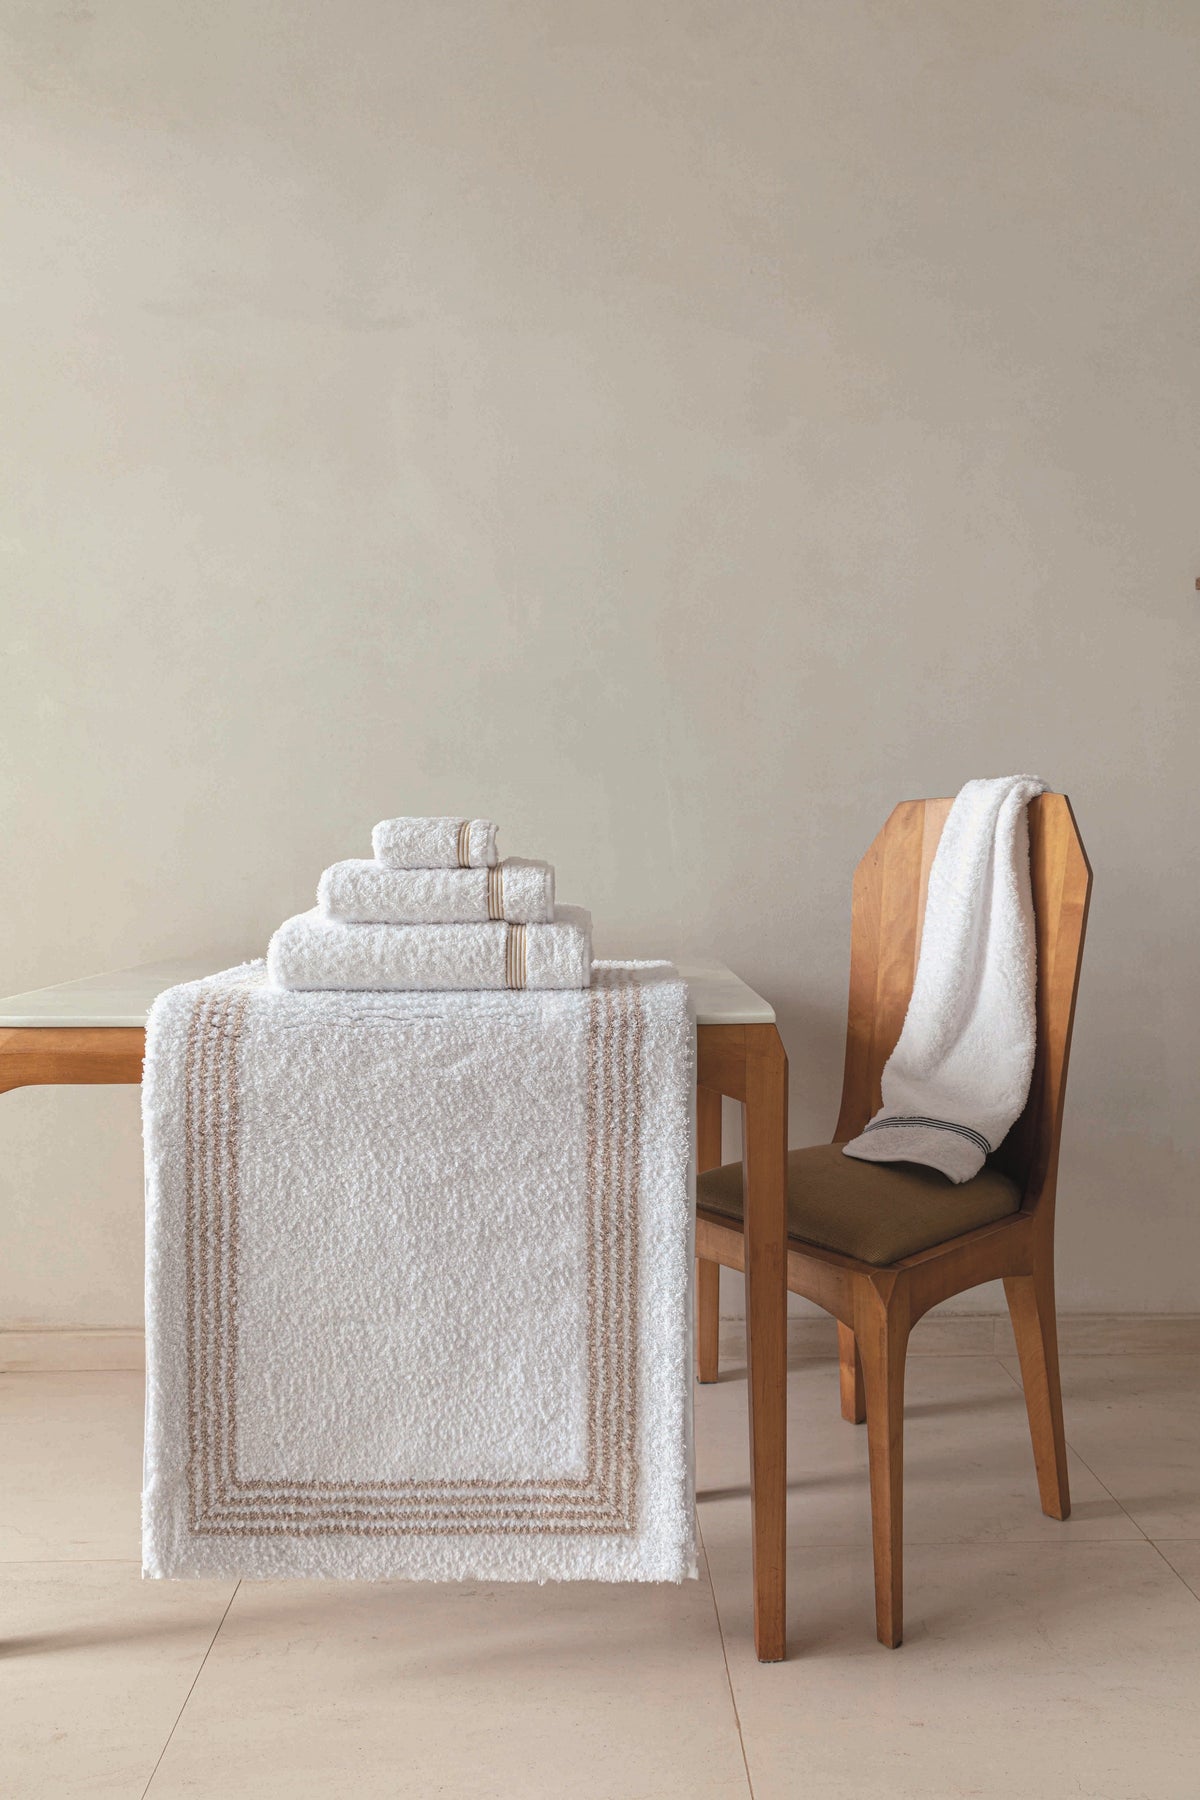 Lifestyle Image of Graccioza Bourdon Bath Towels and Rugs